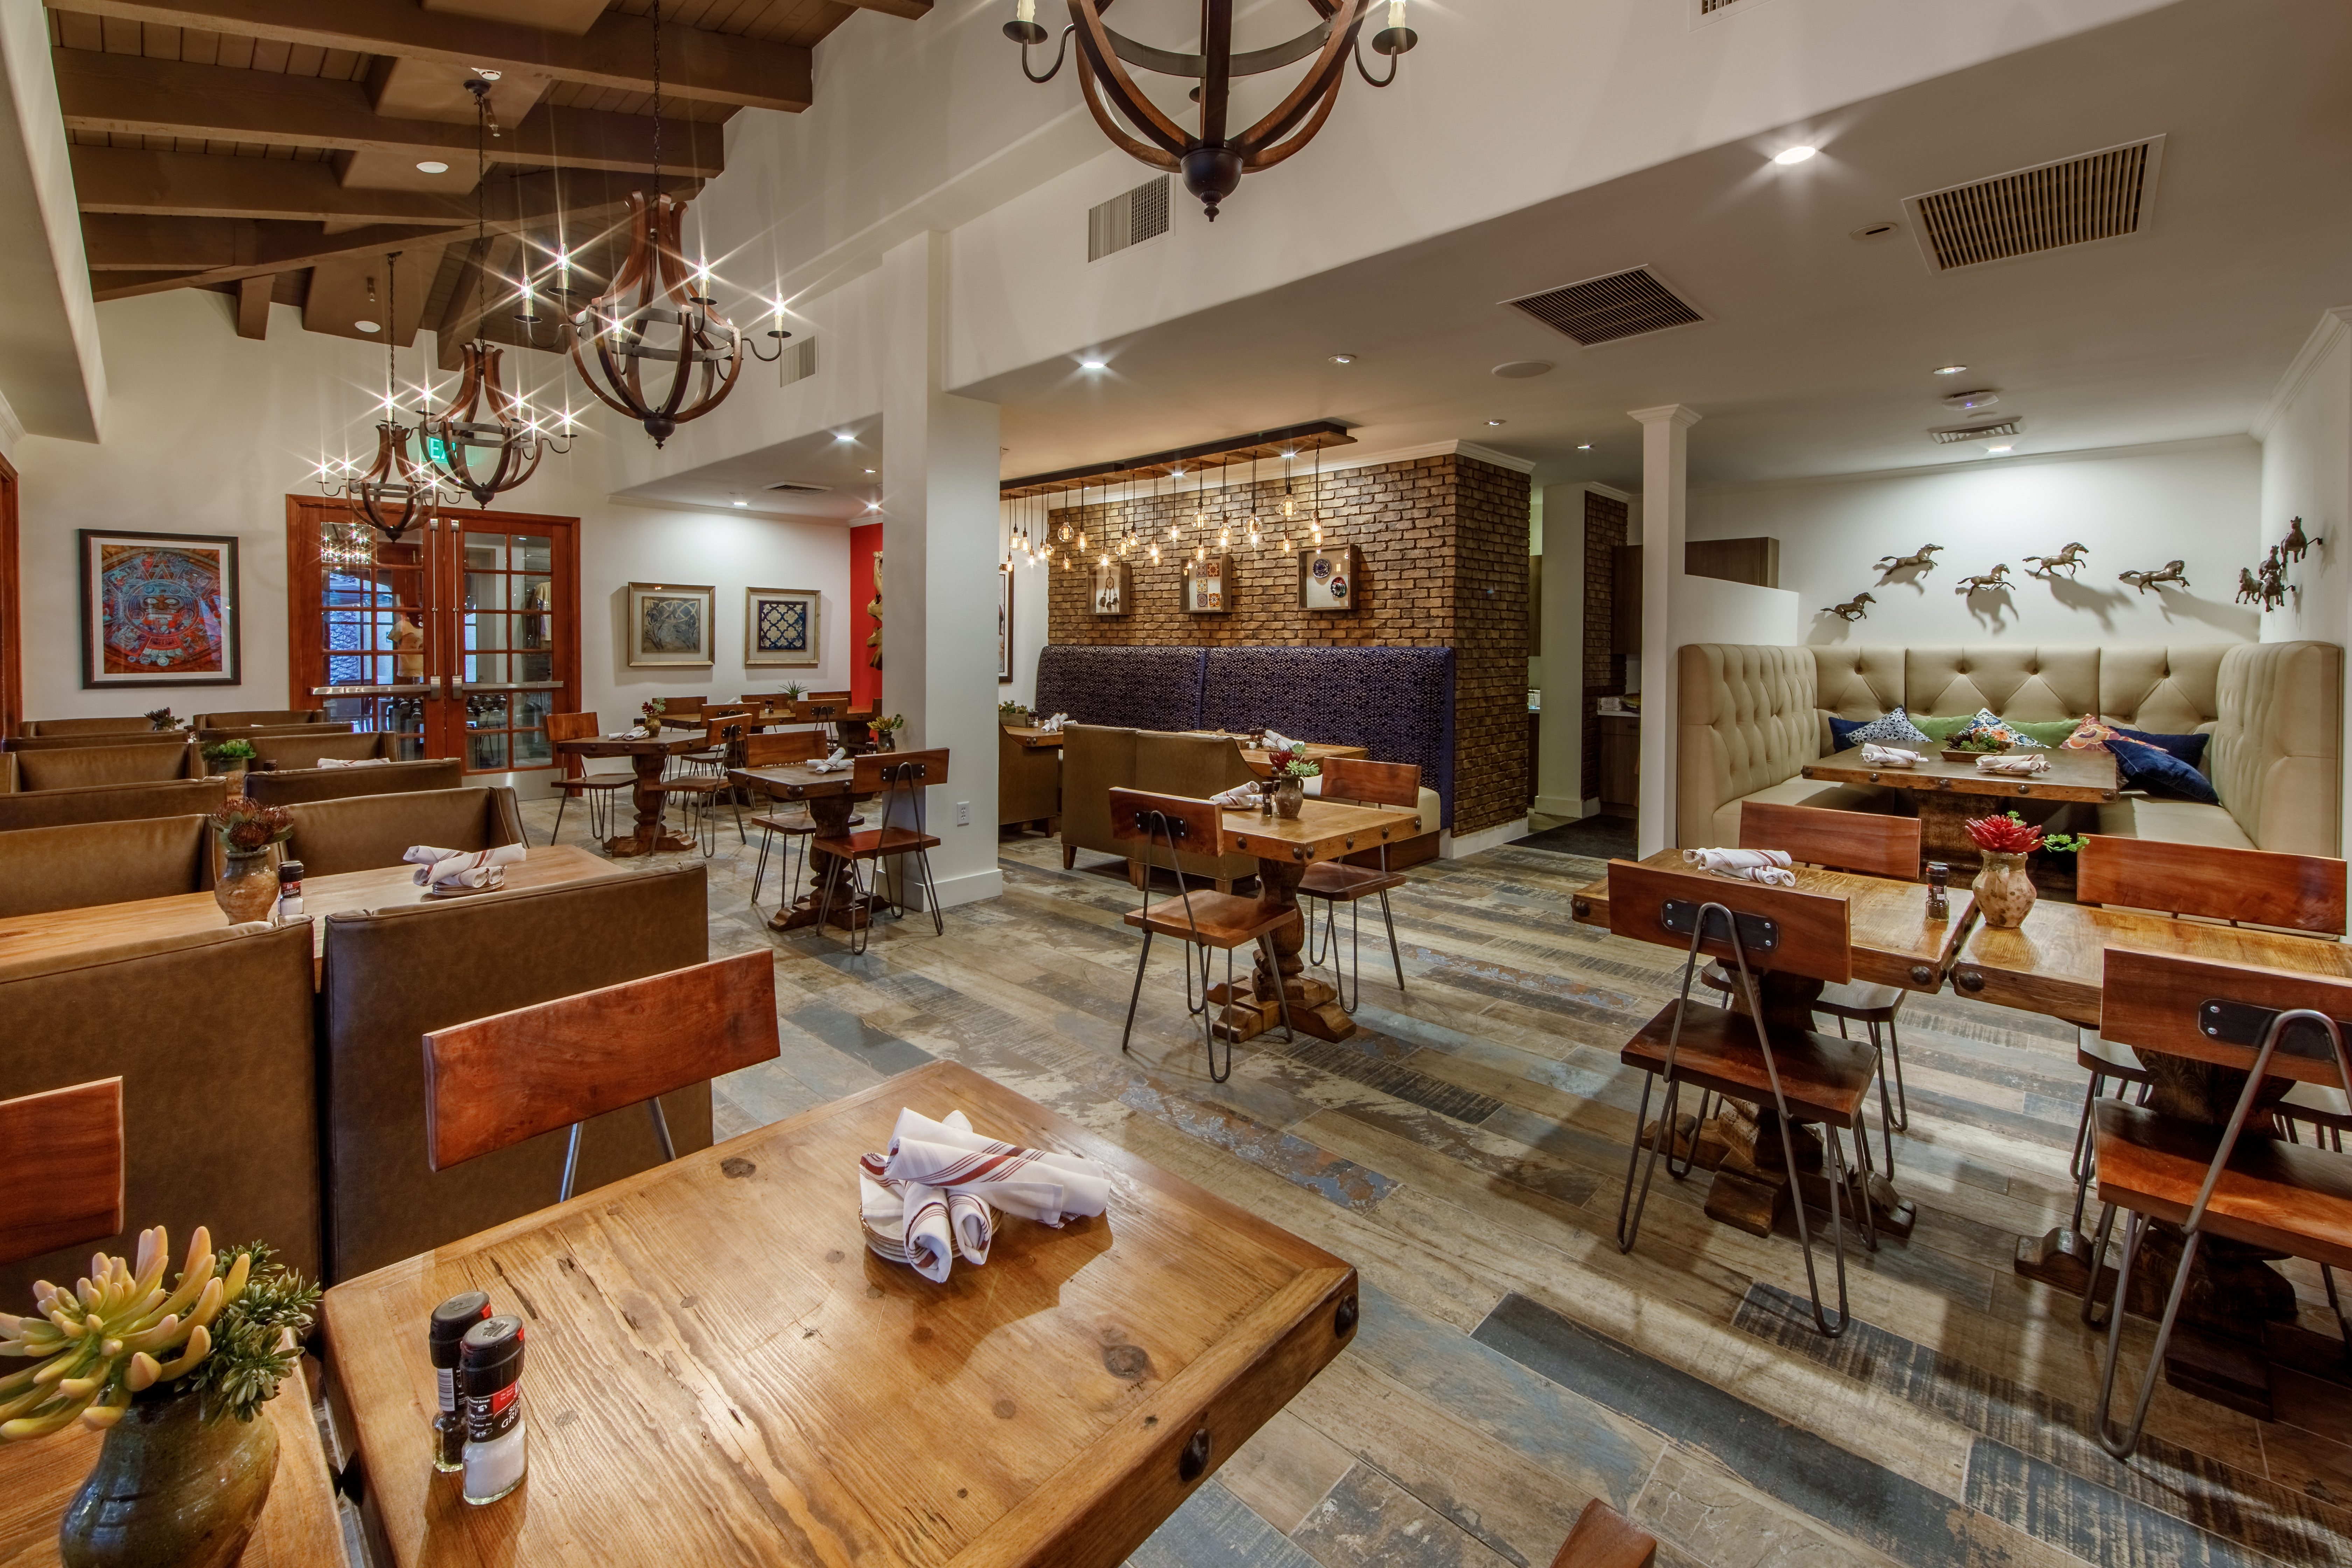 ArteZania Kitchen & Cantina at the Holiday Inn Club Vacations Scottsdale  Resort